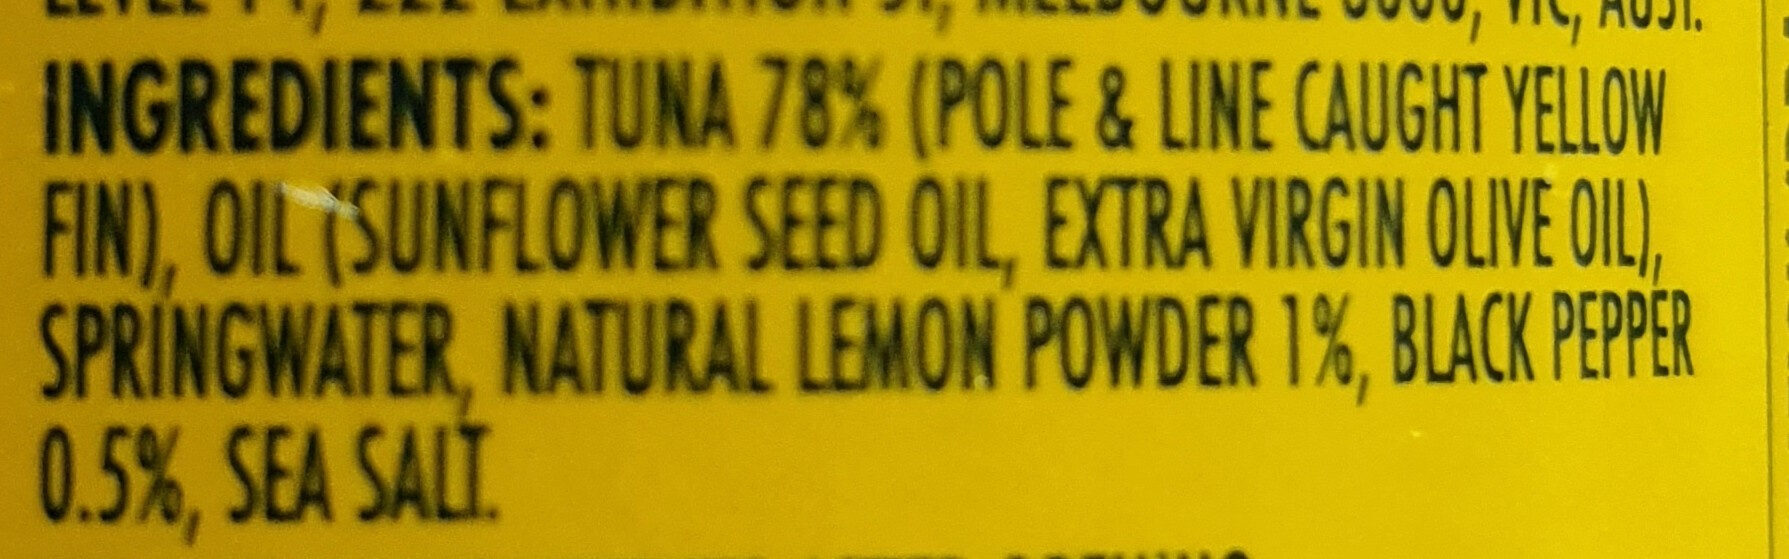 Lemon and Pepper Tuna in Oil - Ingredients